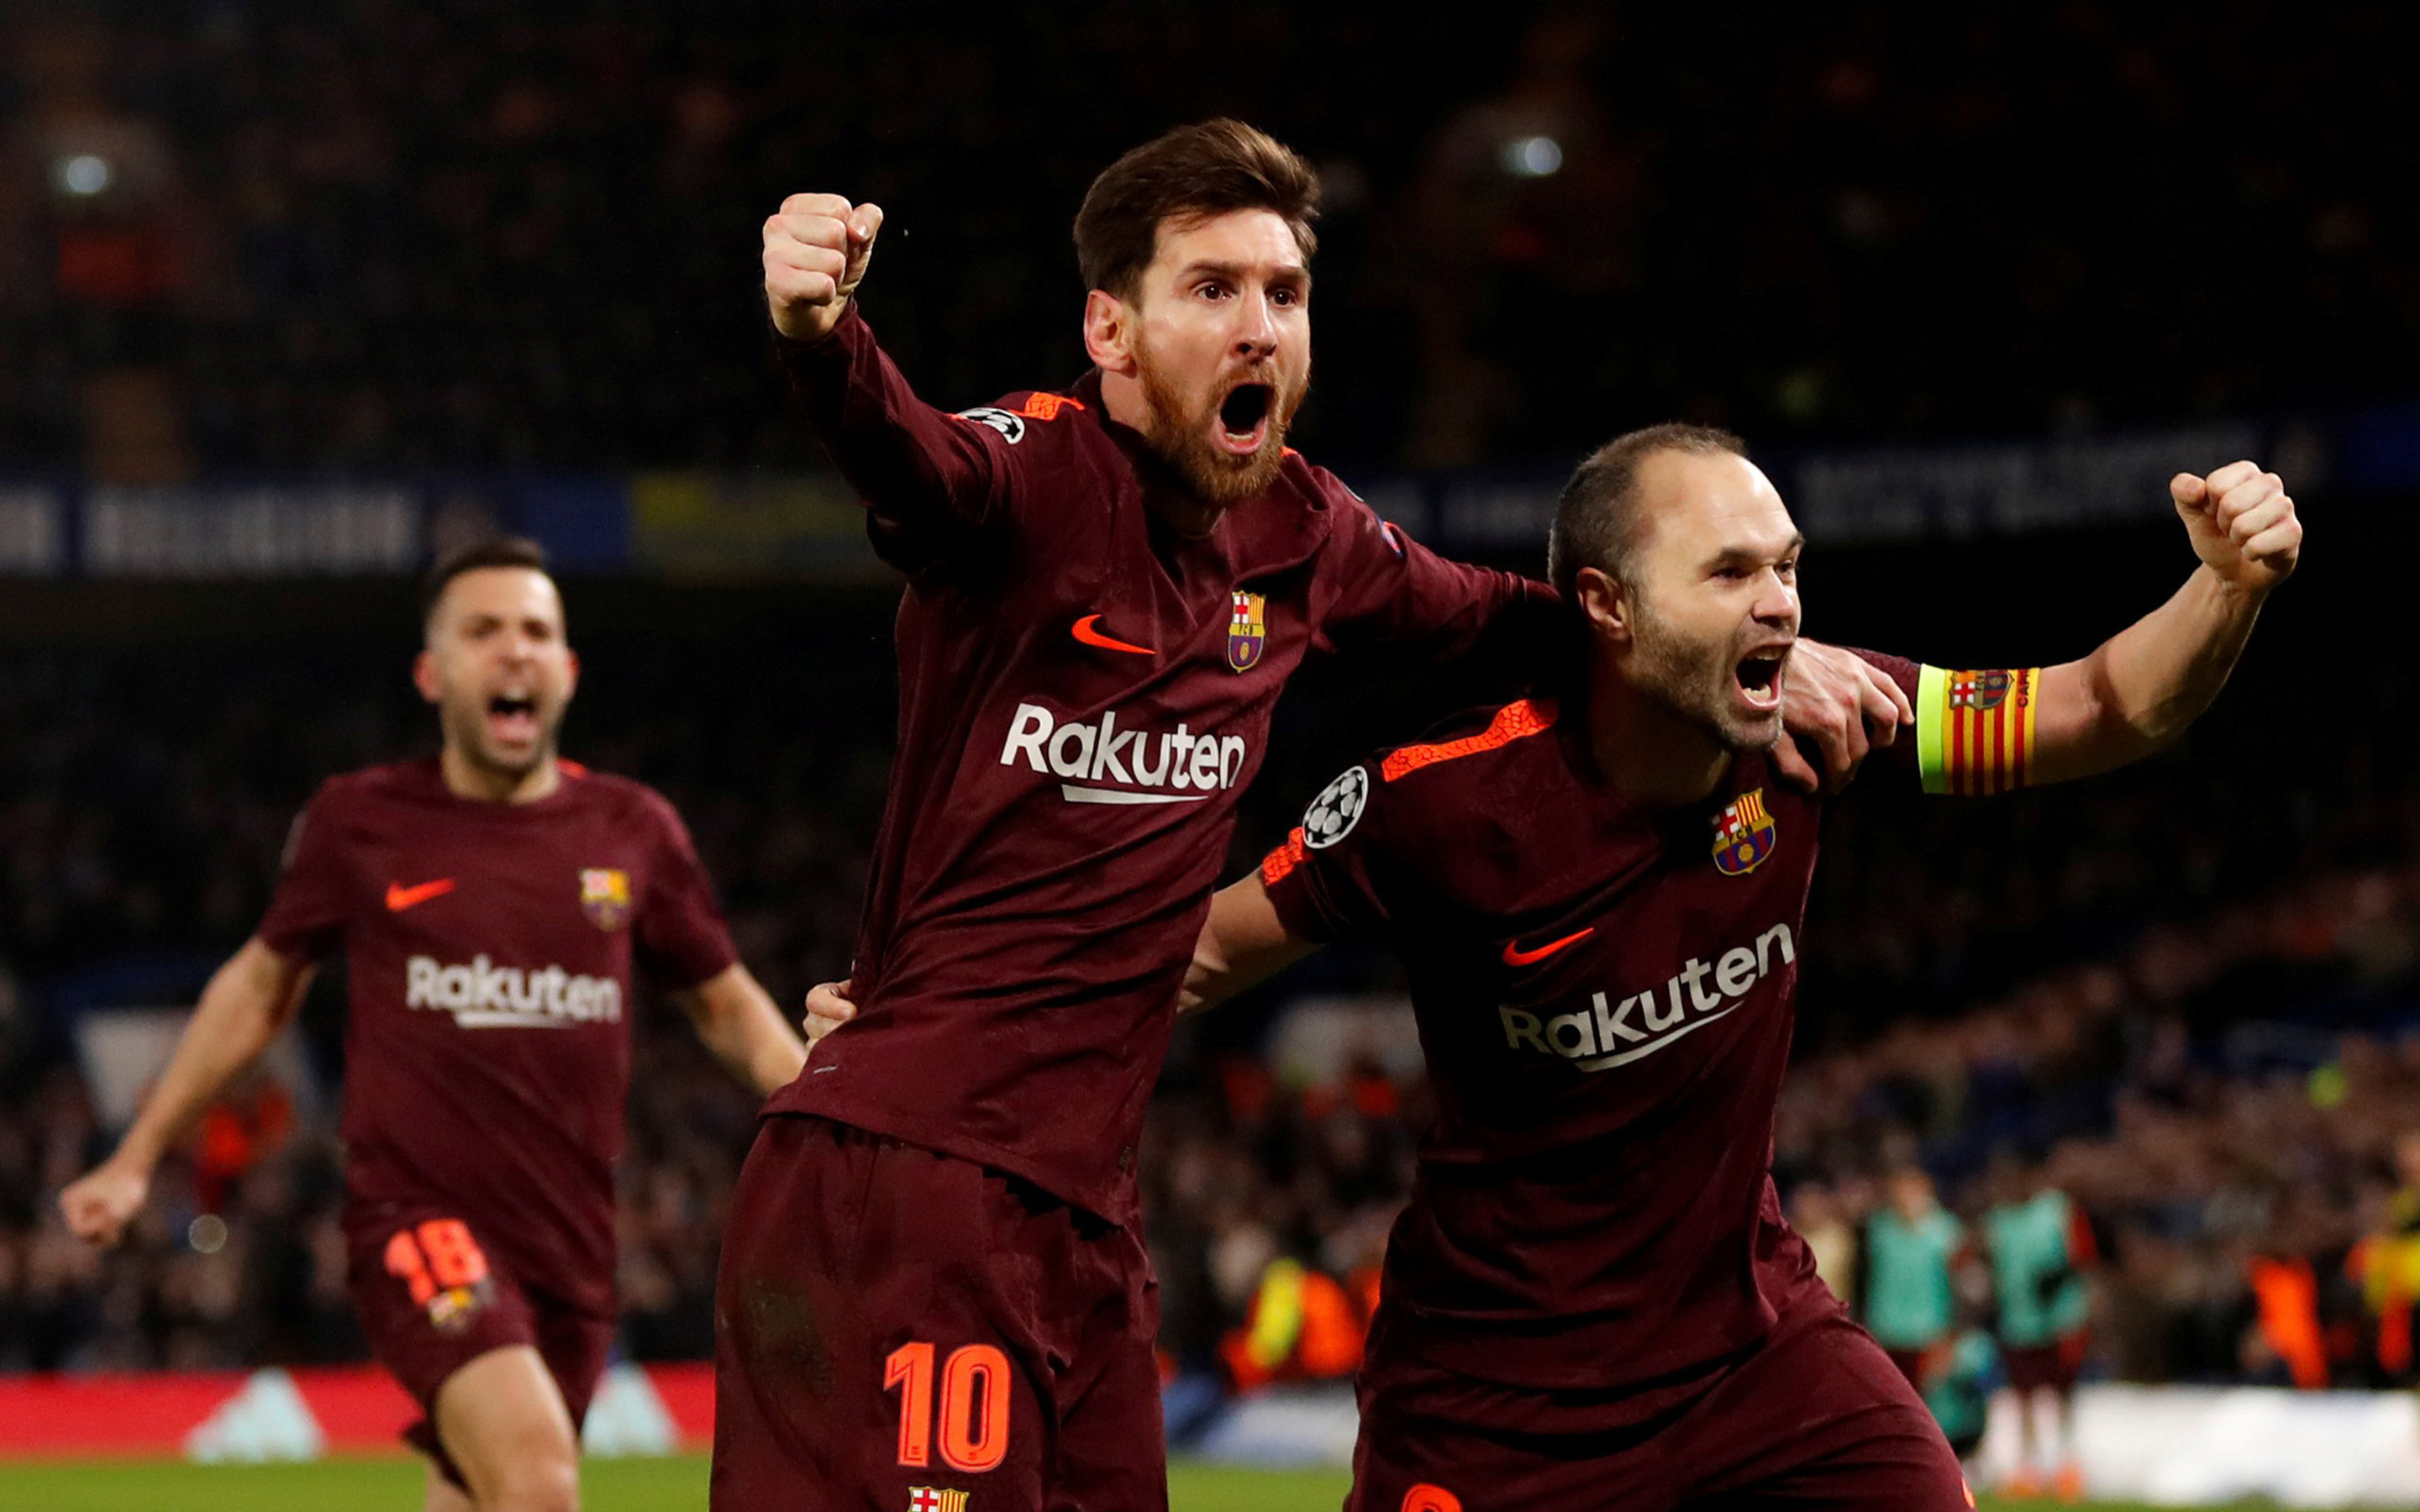 Andres Iniesta, Football legends unite, FC Barcelona magic, Messi and Iniesta duo, 2880x1800 HD Desktop